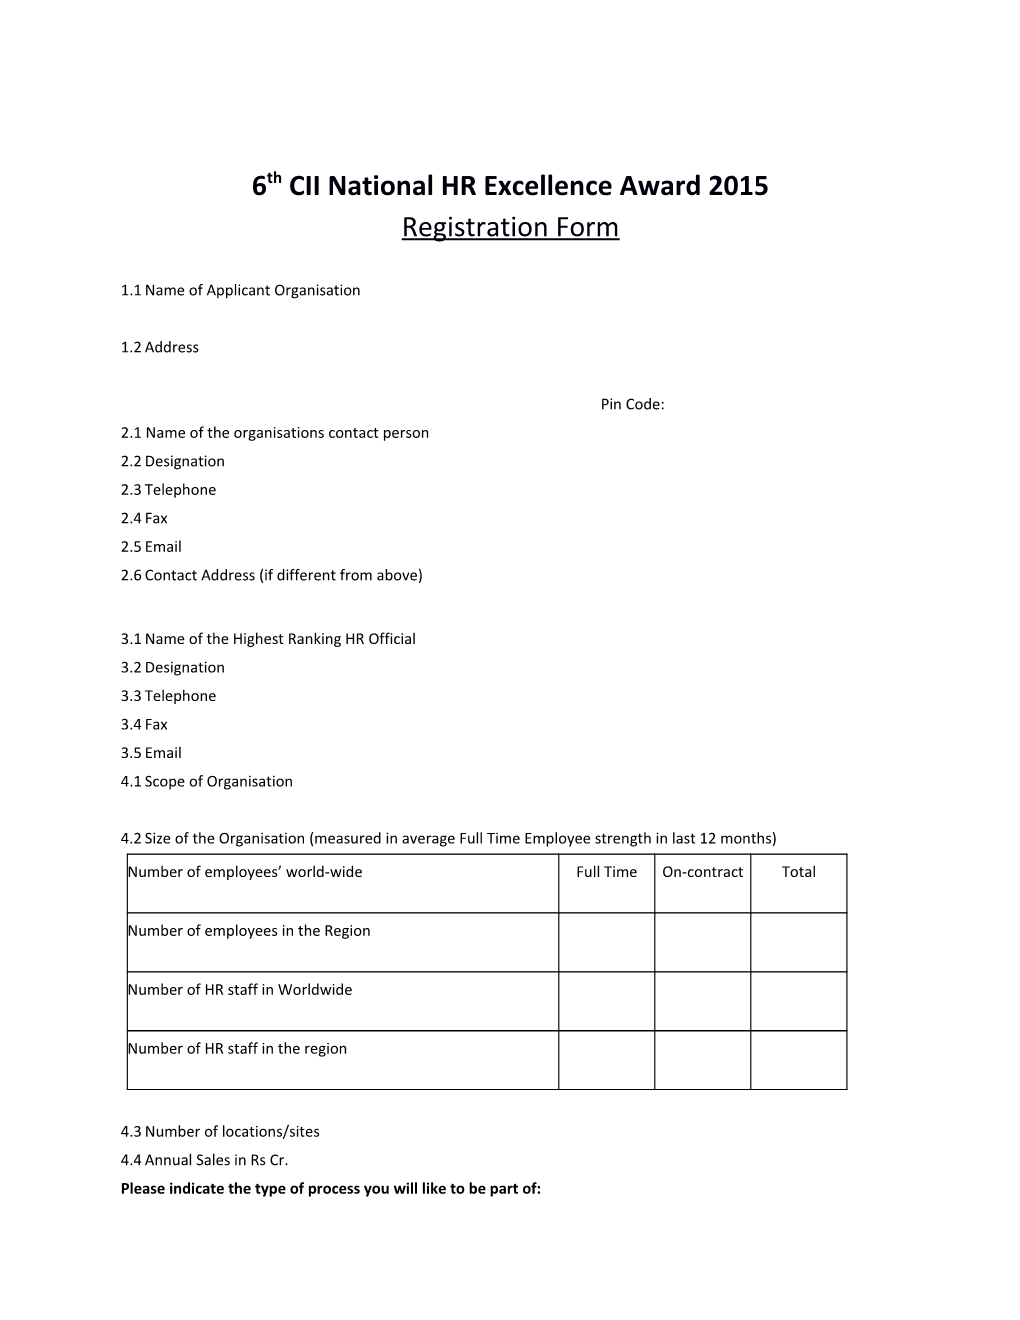 6Thcii National HR Excellence Award 2015